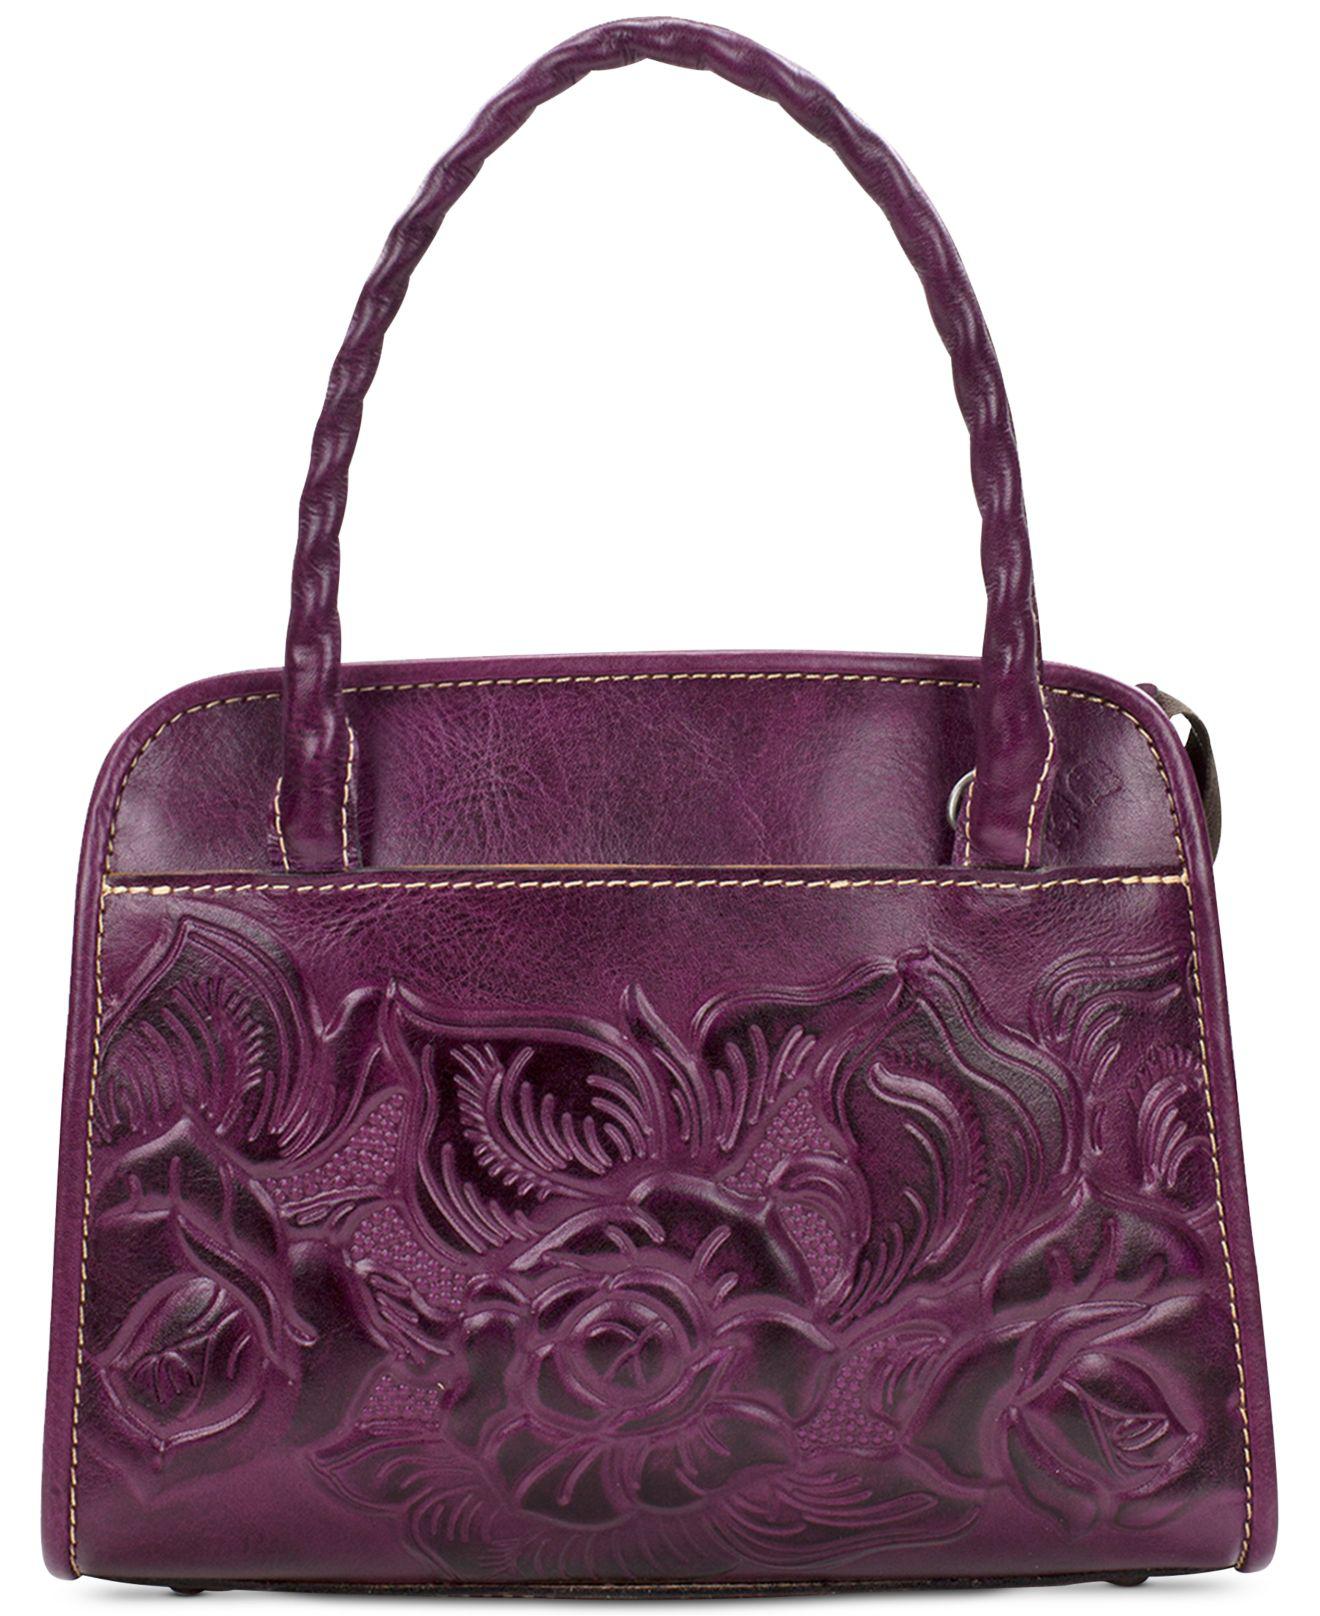 Patricia Nash Leather Paris Floral Embossed Satchel in Burgundy (Purple